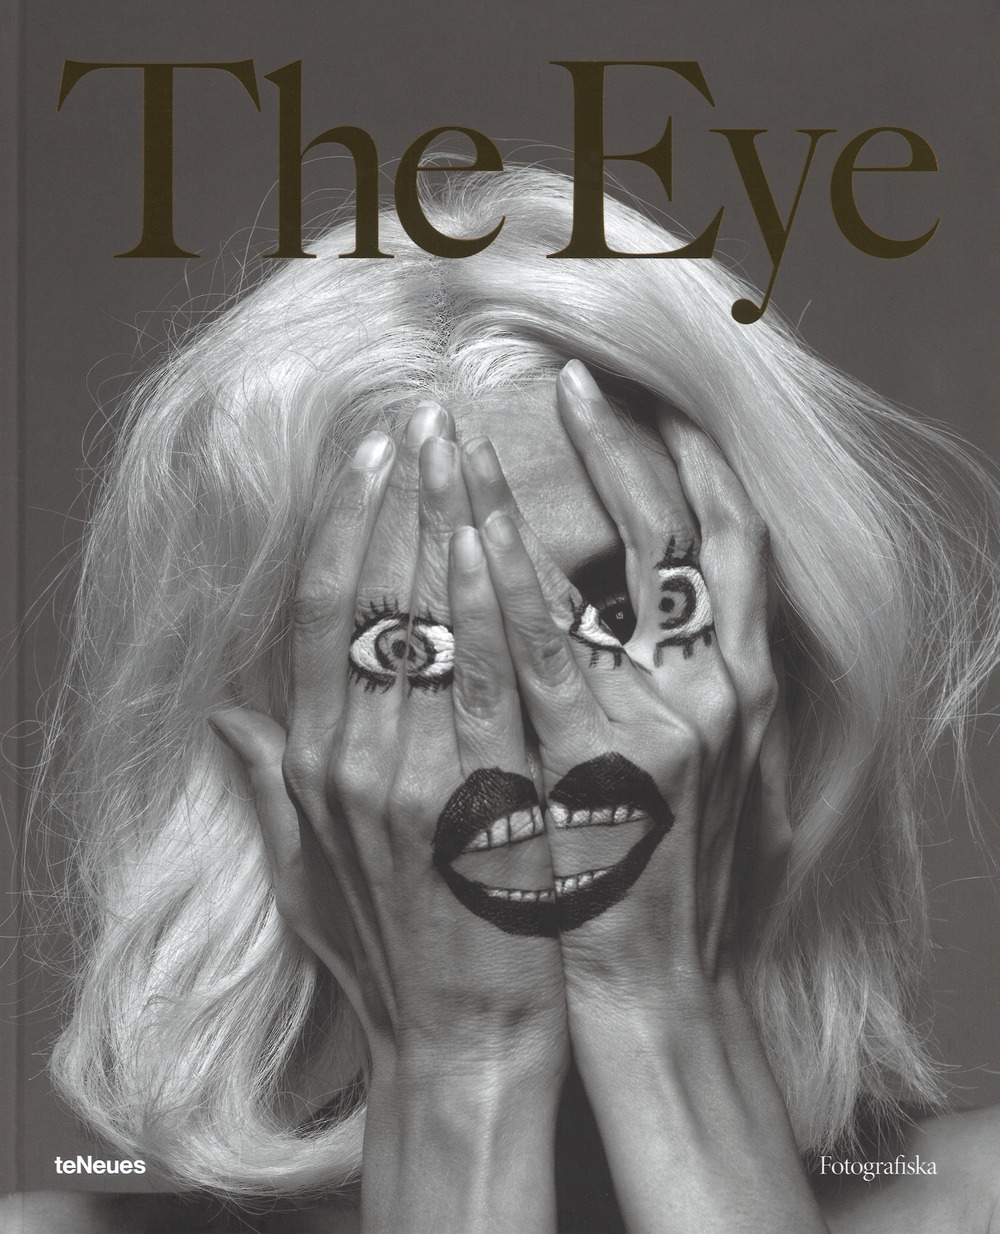 The Eye. Ediz. illustrata